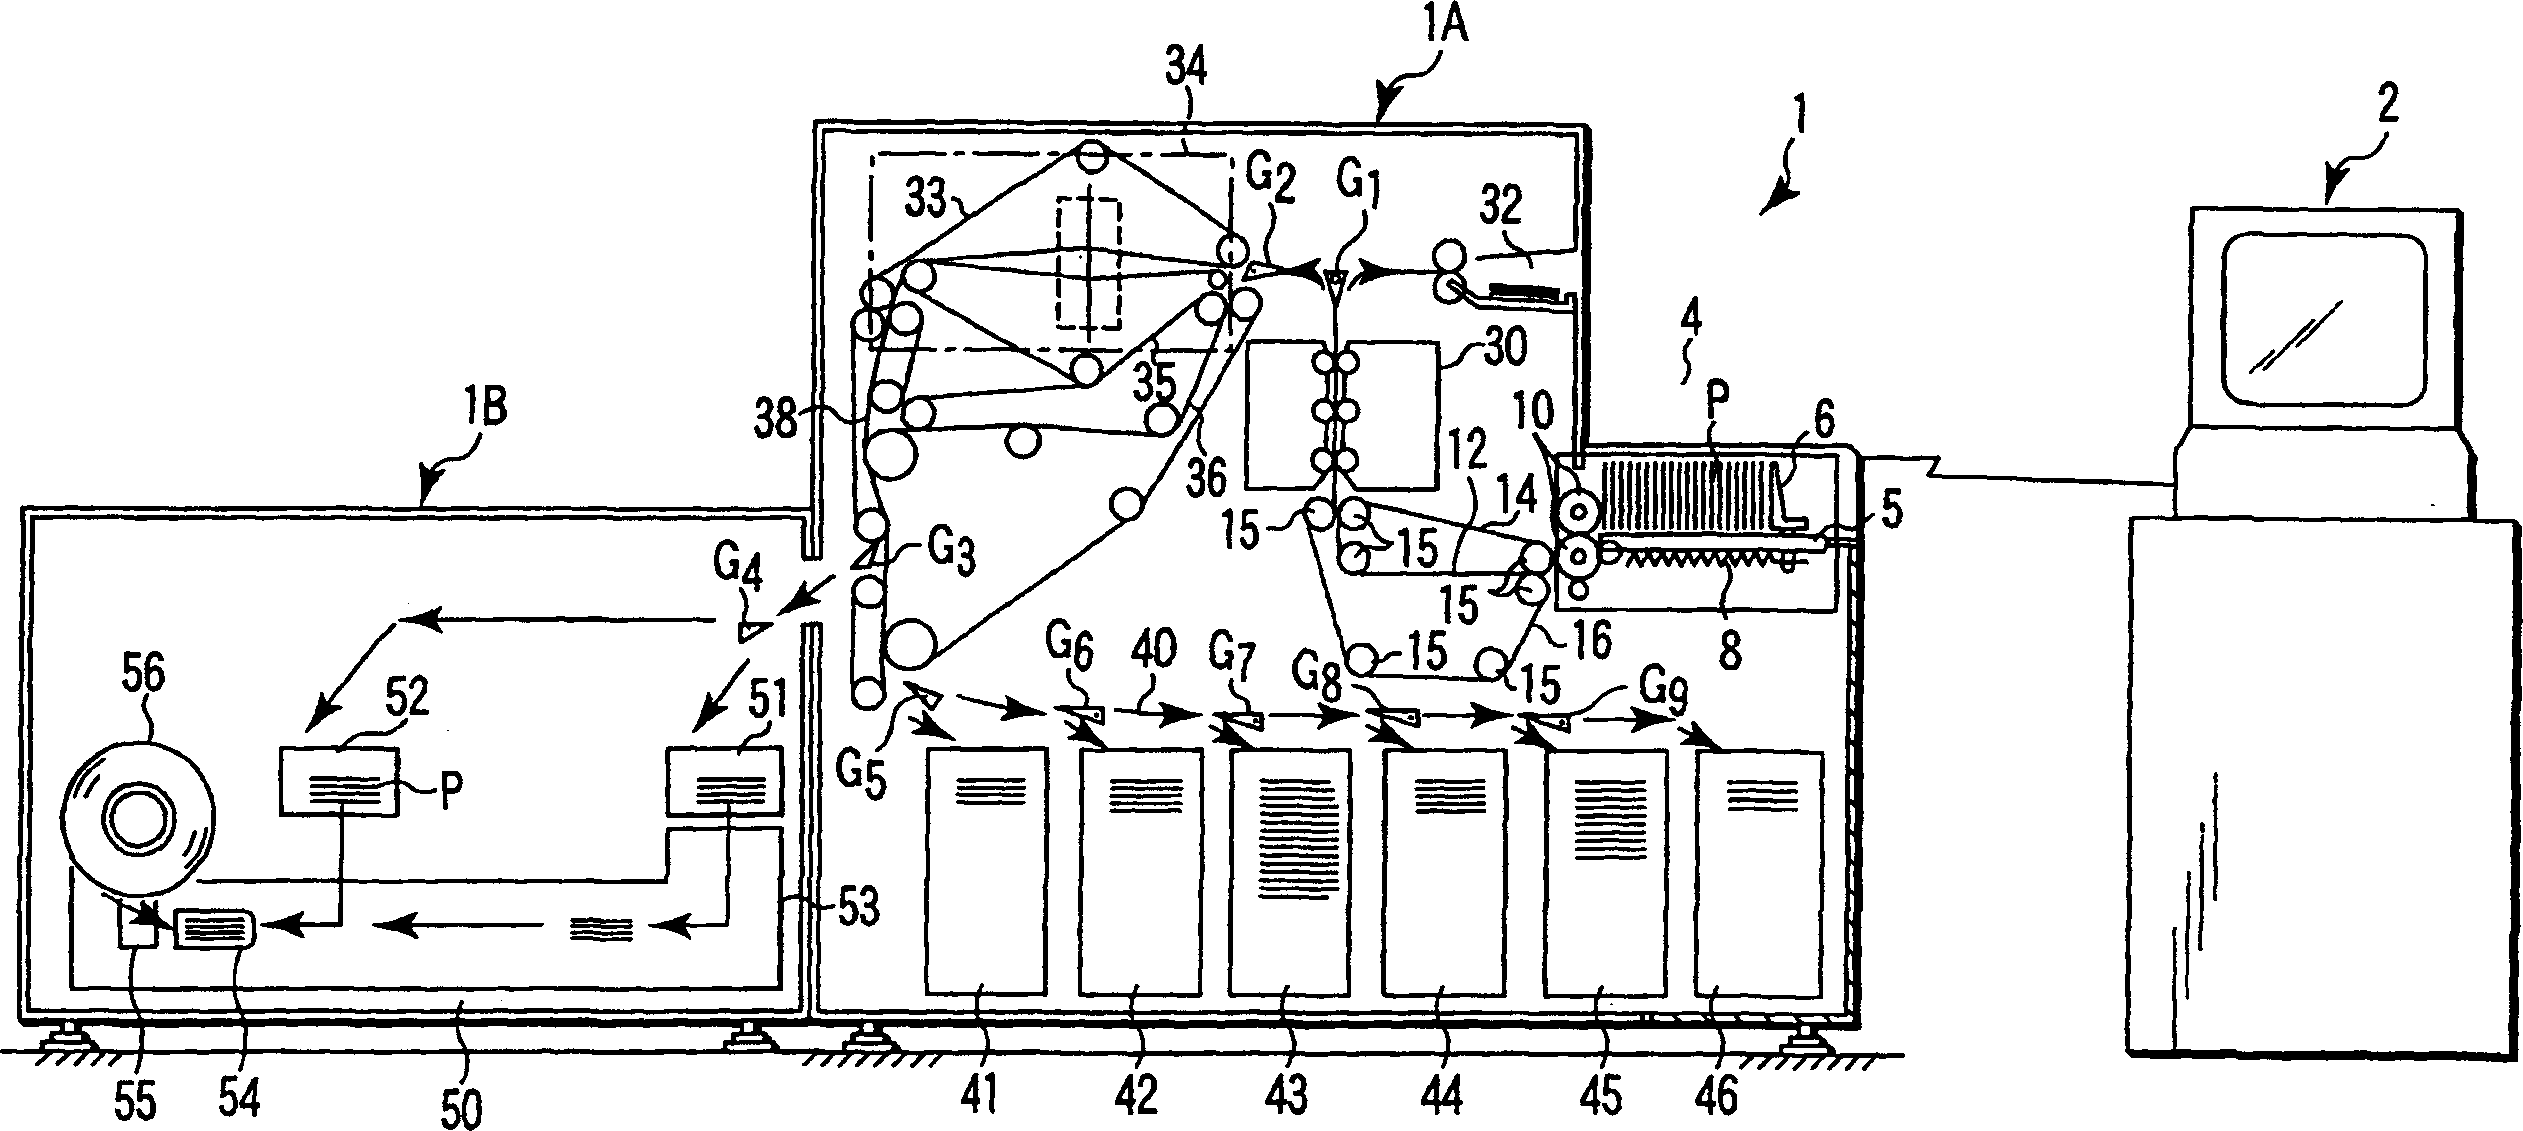 Sheet processing apparatus